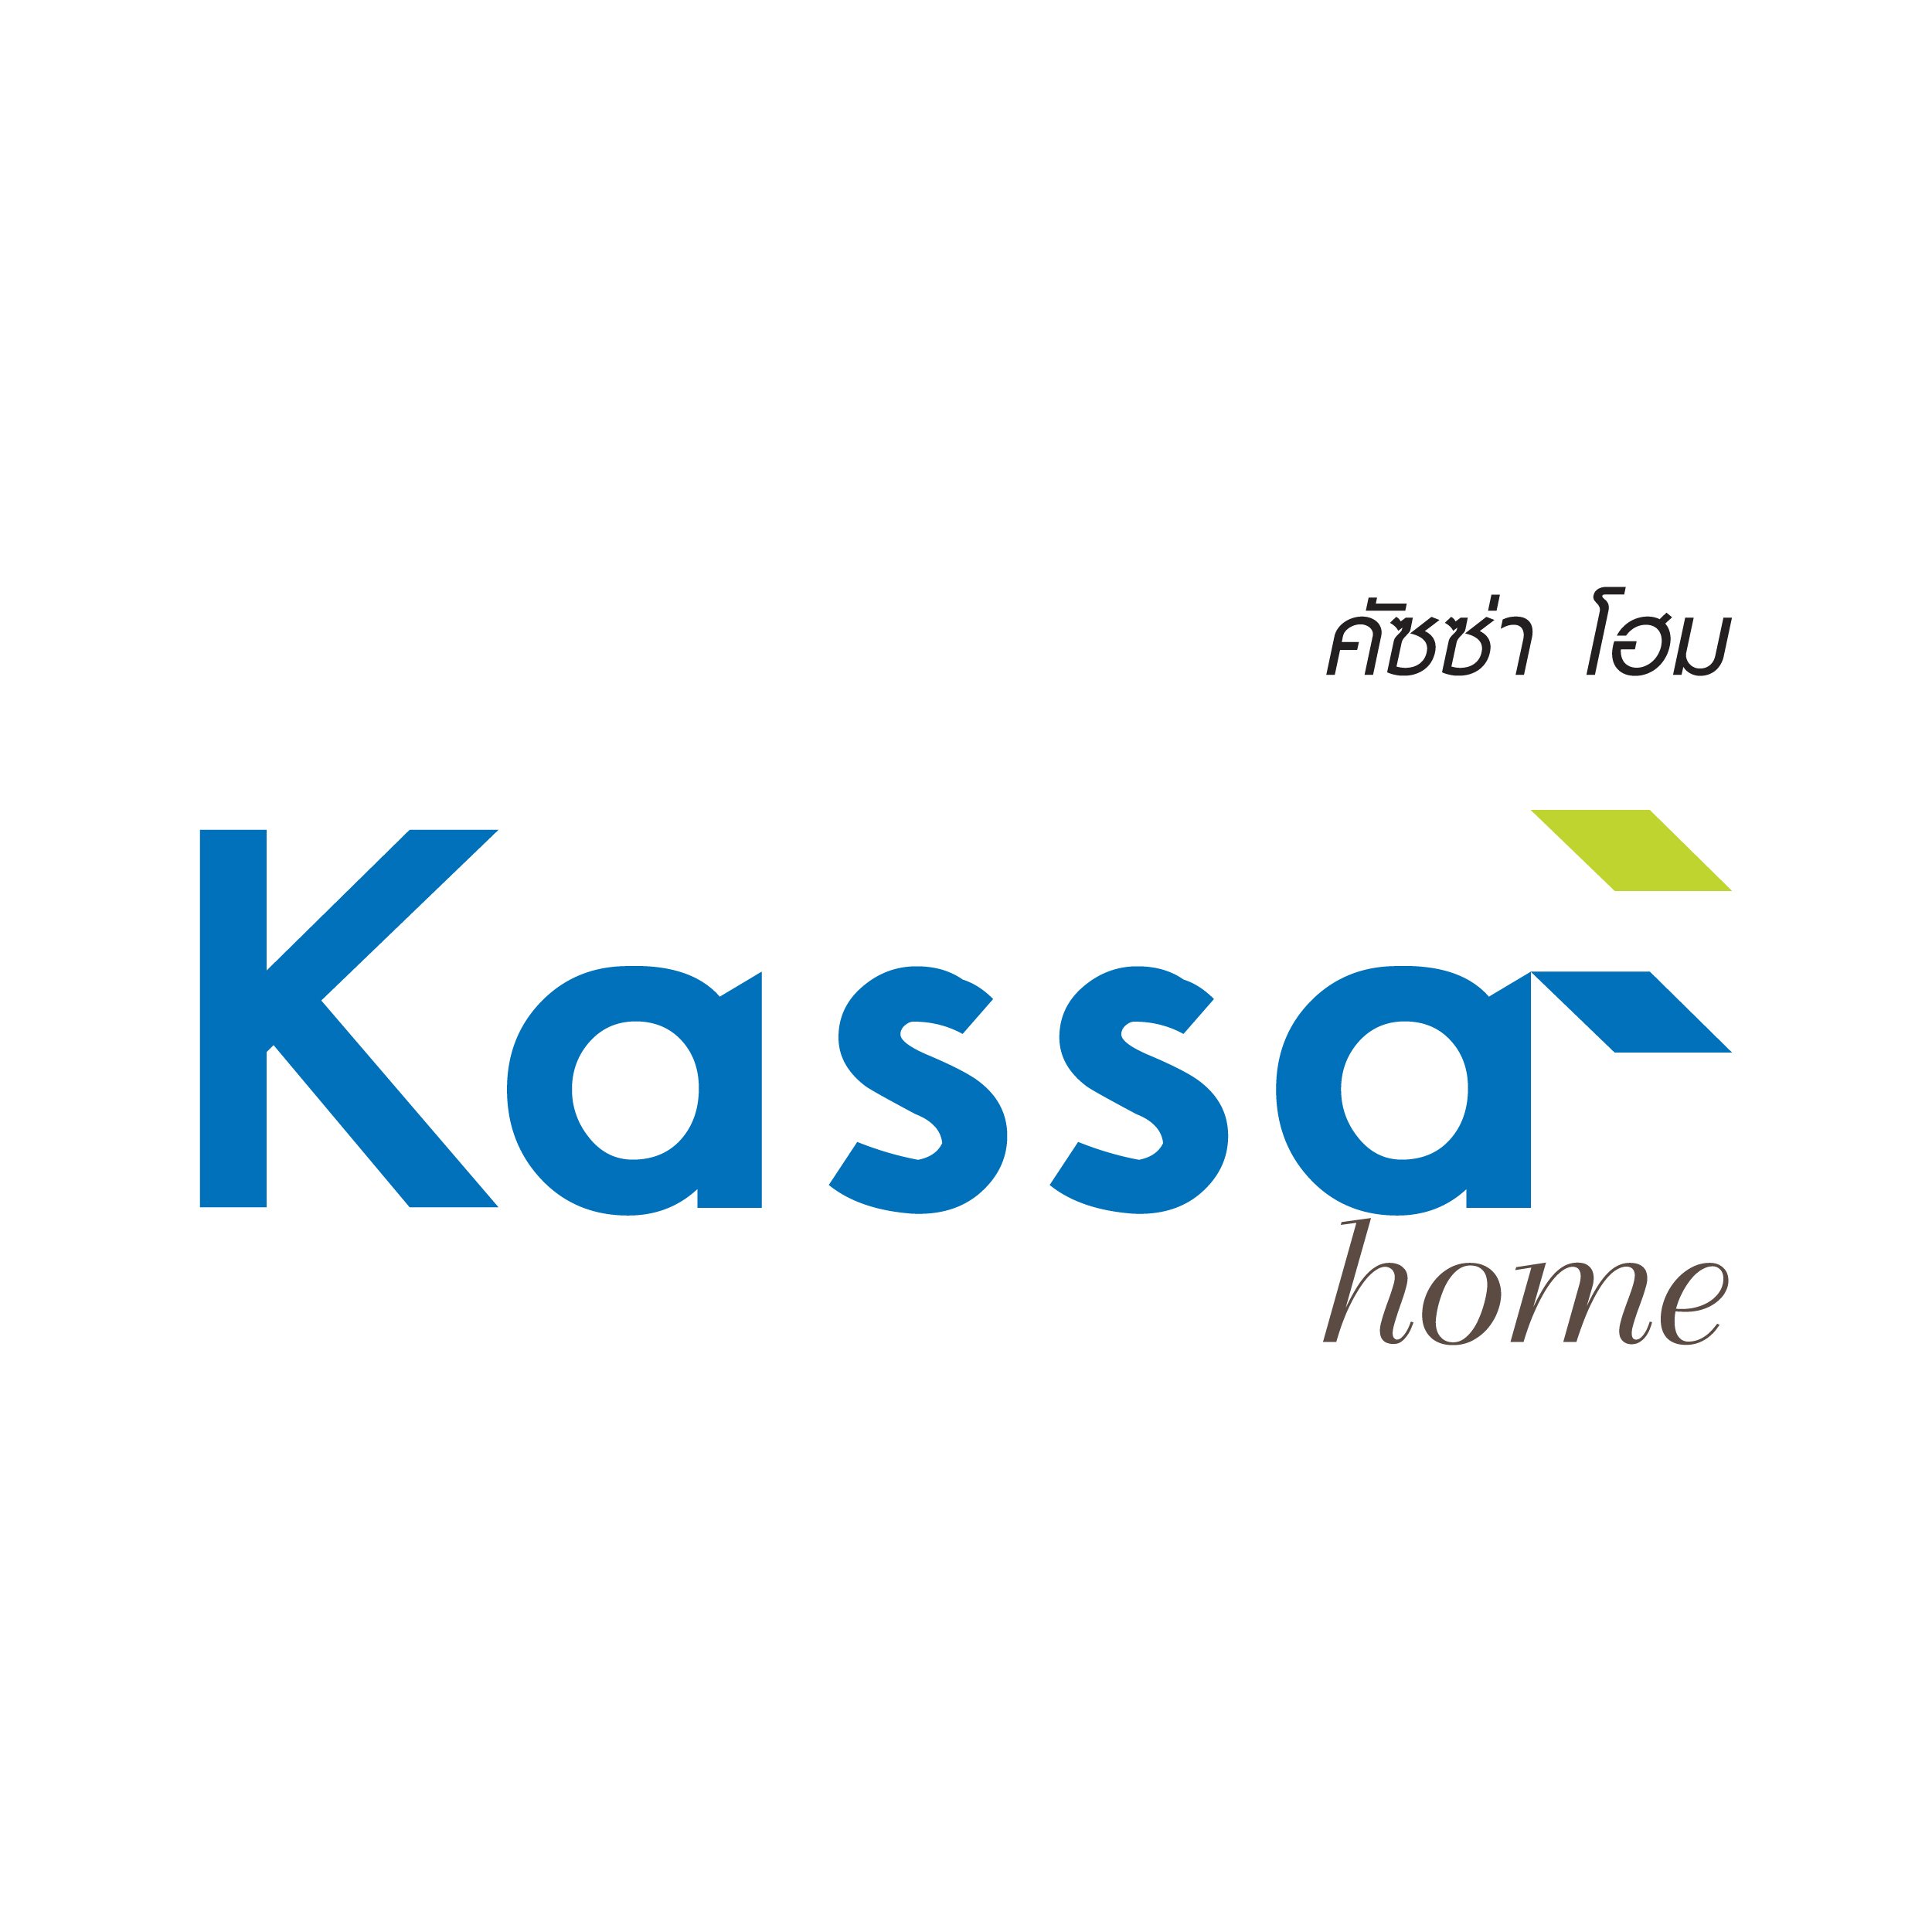 KASSA HOME